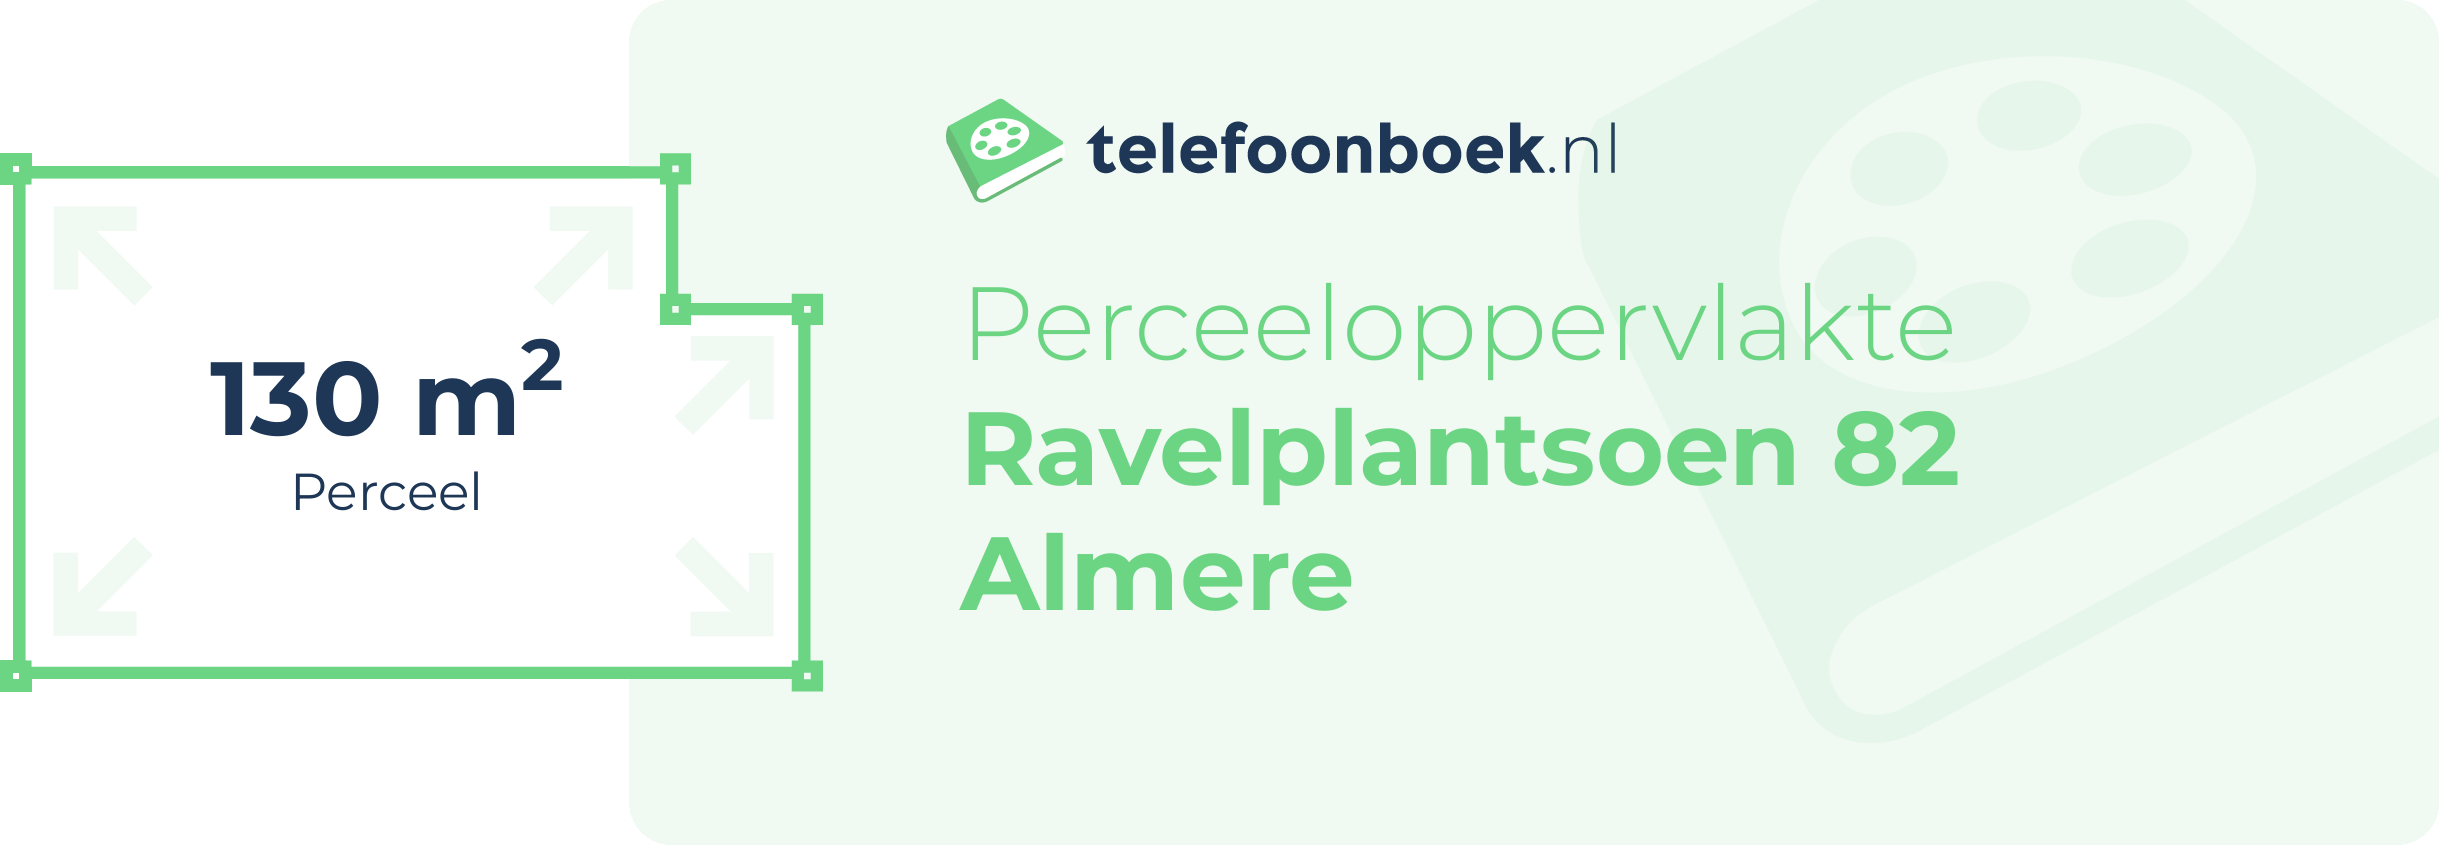 Perceeloppervlakte Ravelplantsoen 82 Almere